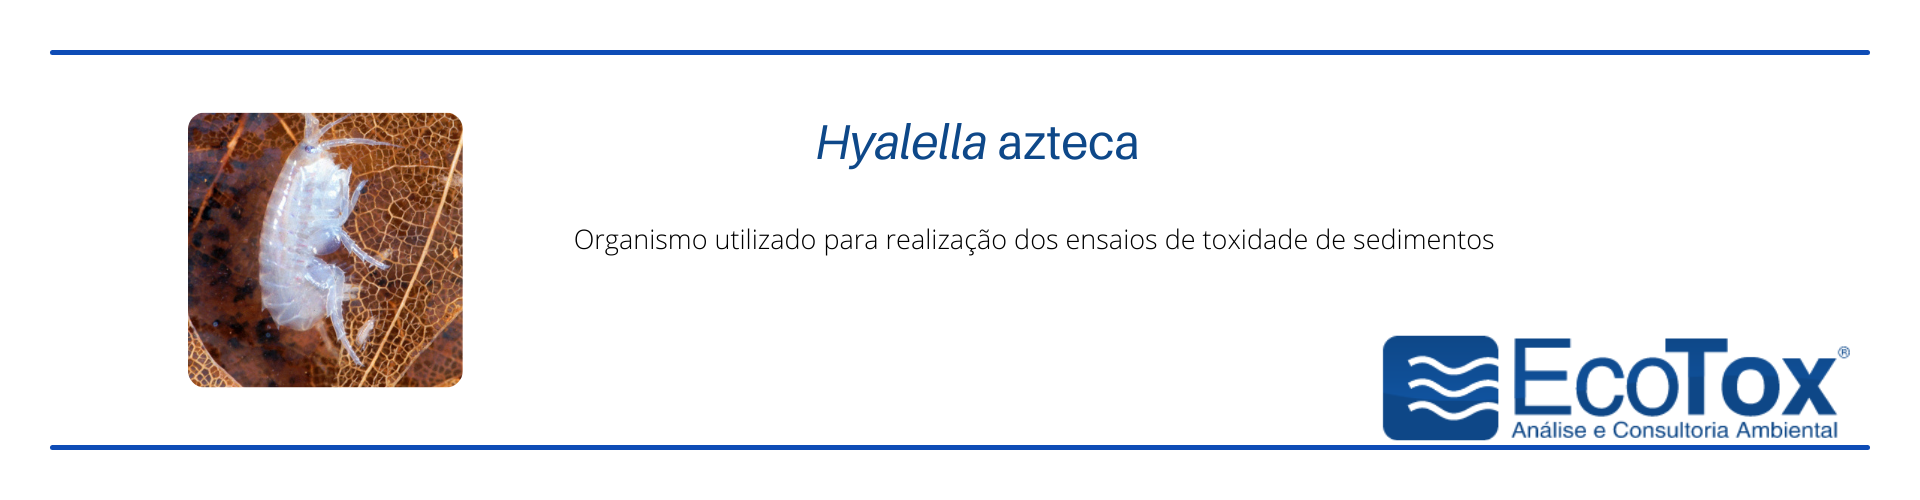 Hyalella azteca